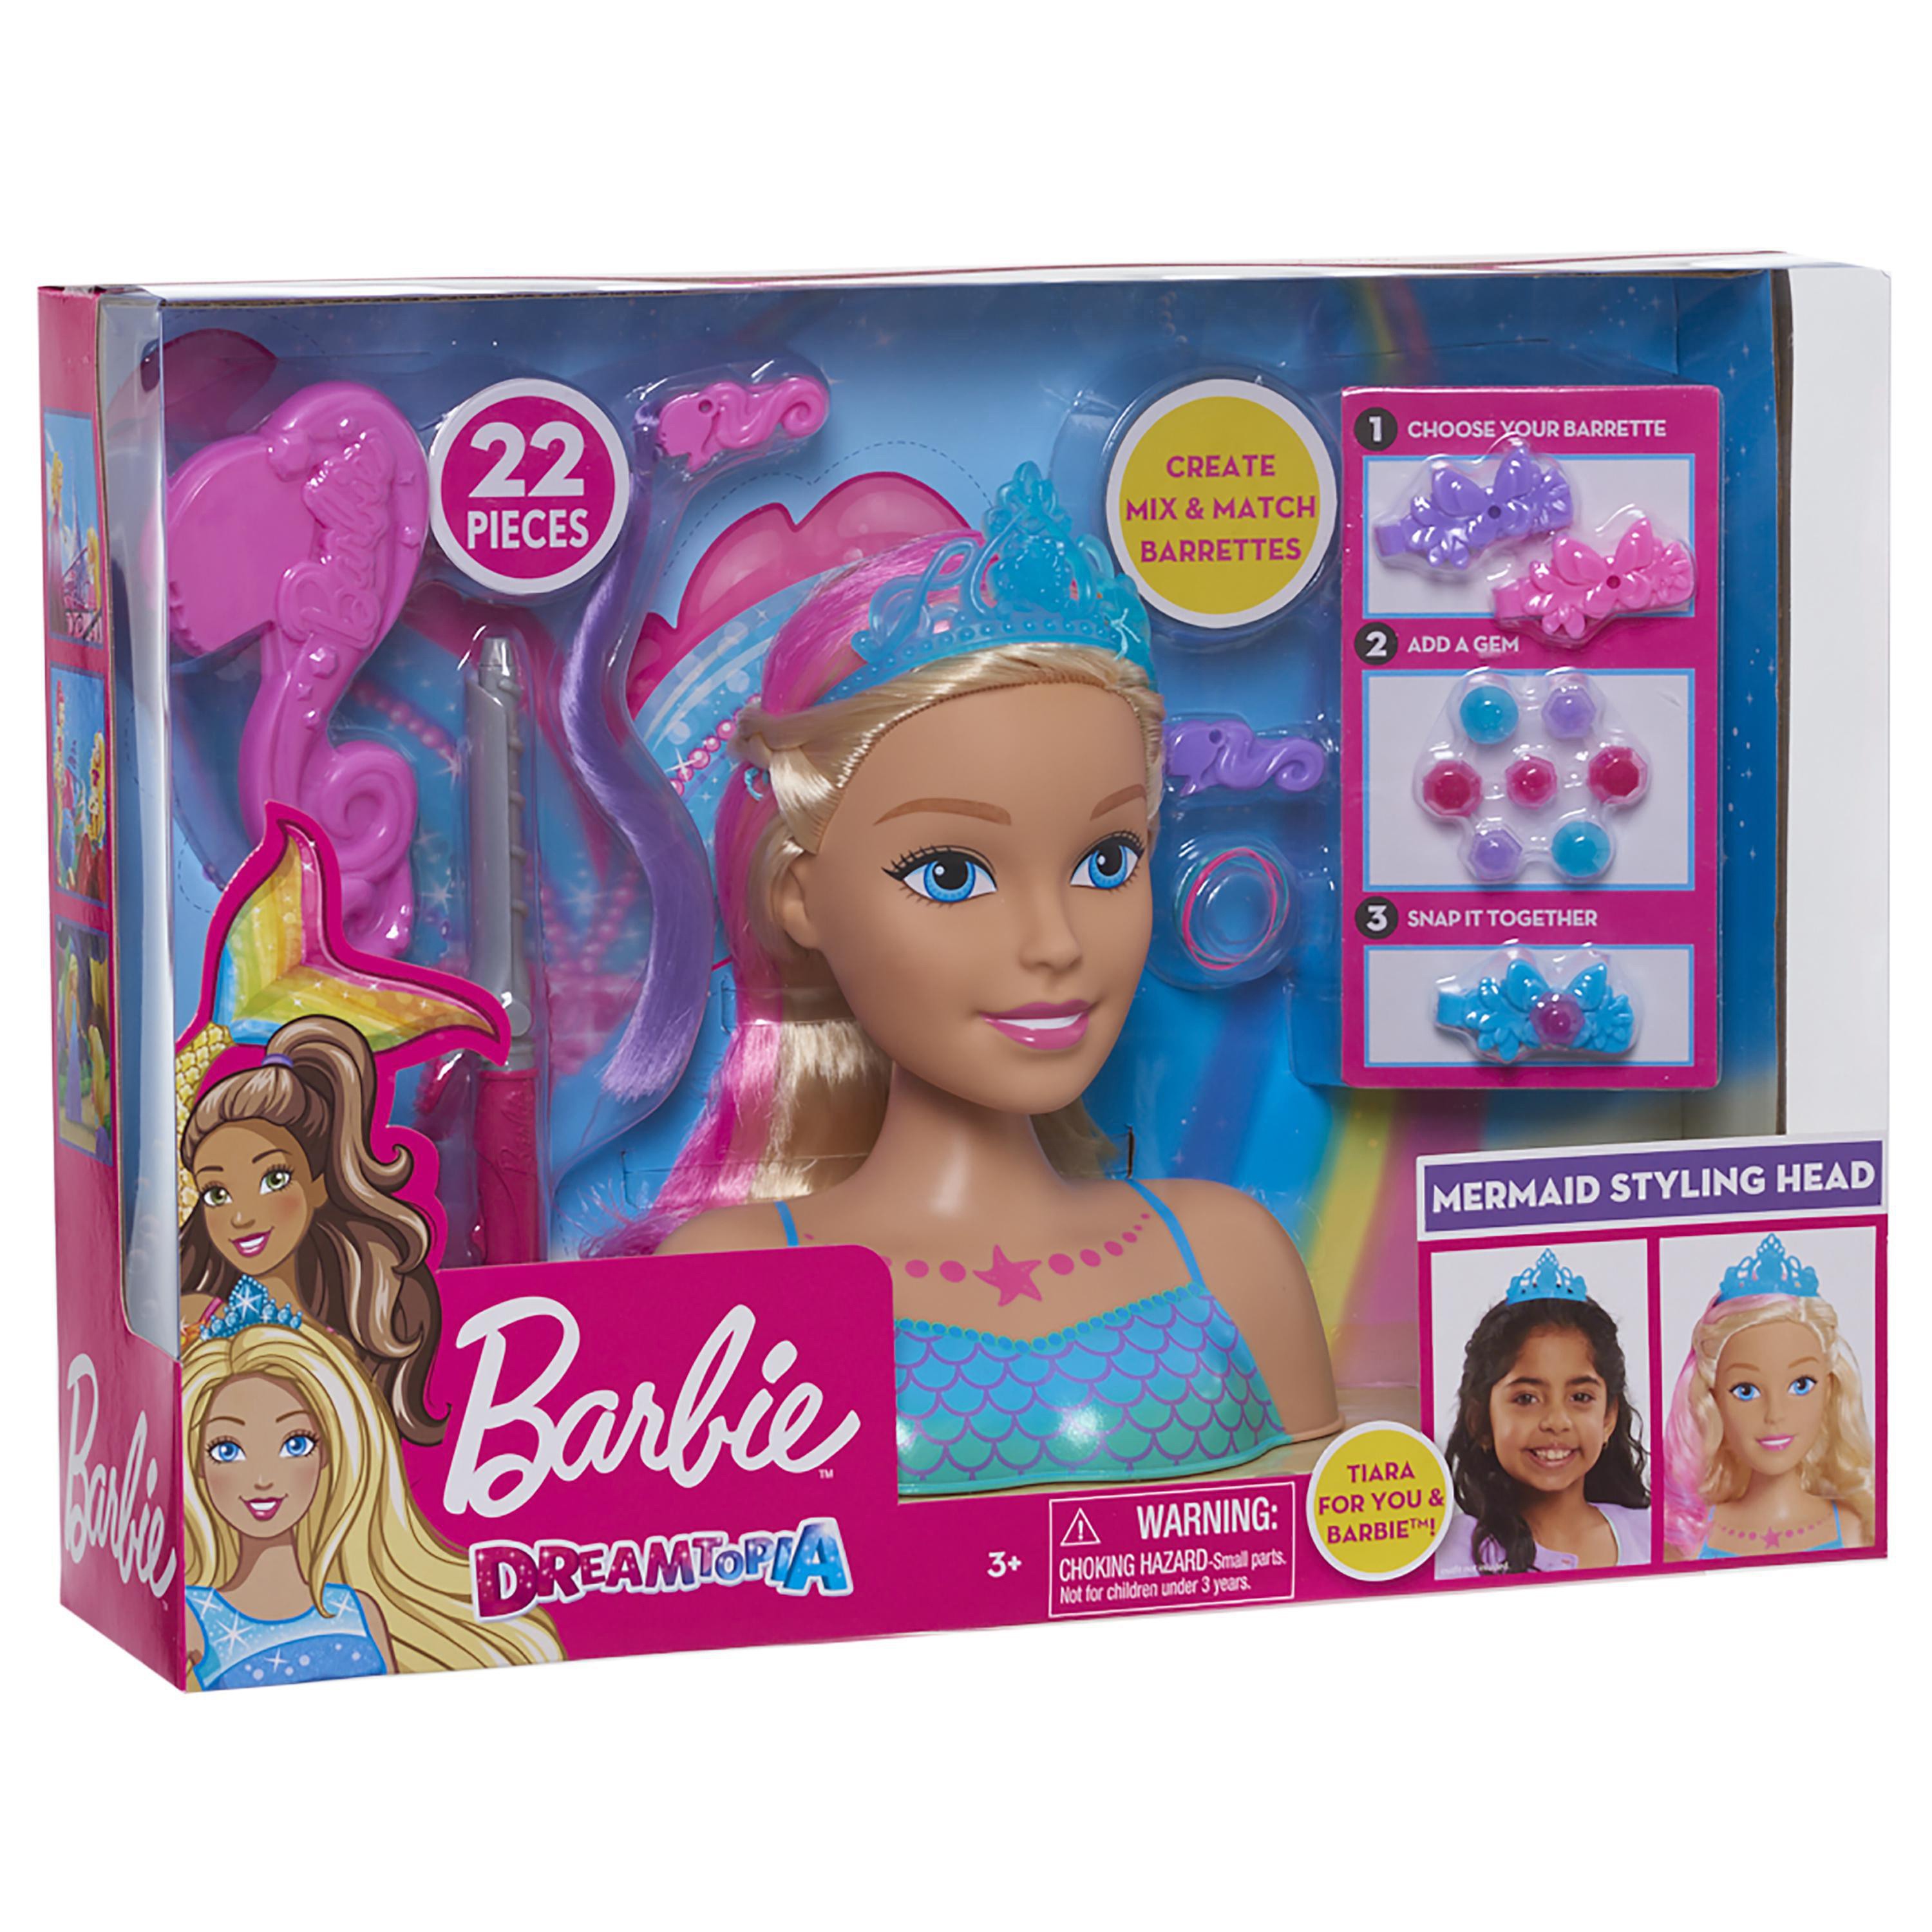 Spielset Dreamtopia Stylinghead JUST Mehrfarbig Barbie PLAY